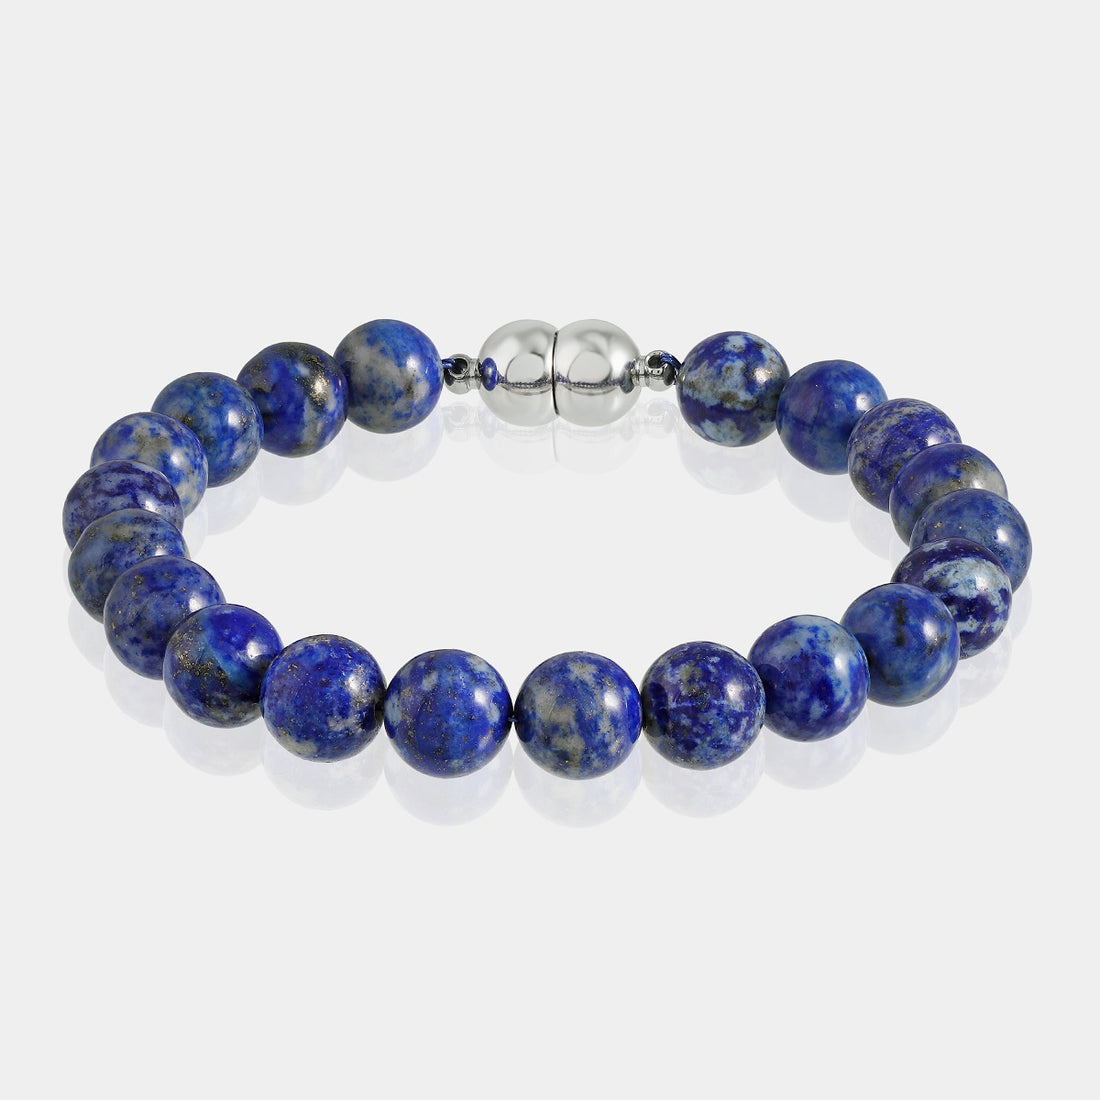 A close-up of a handmade bracelet adorned with smooth round lapis lazuli gemstone beads, showcasing its deep blue color and elegance.